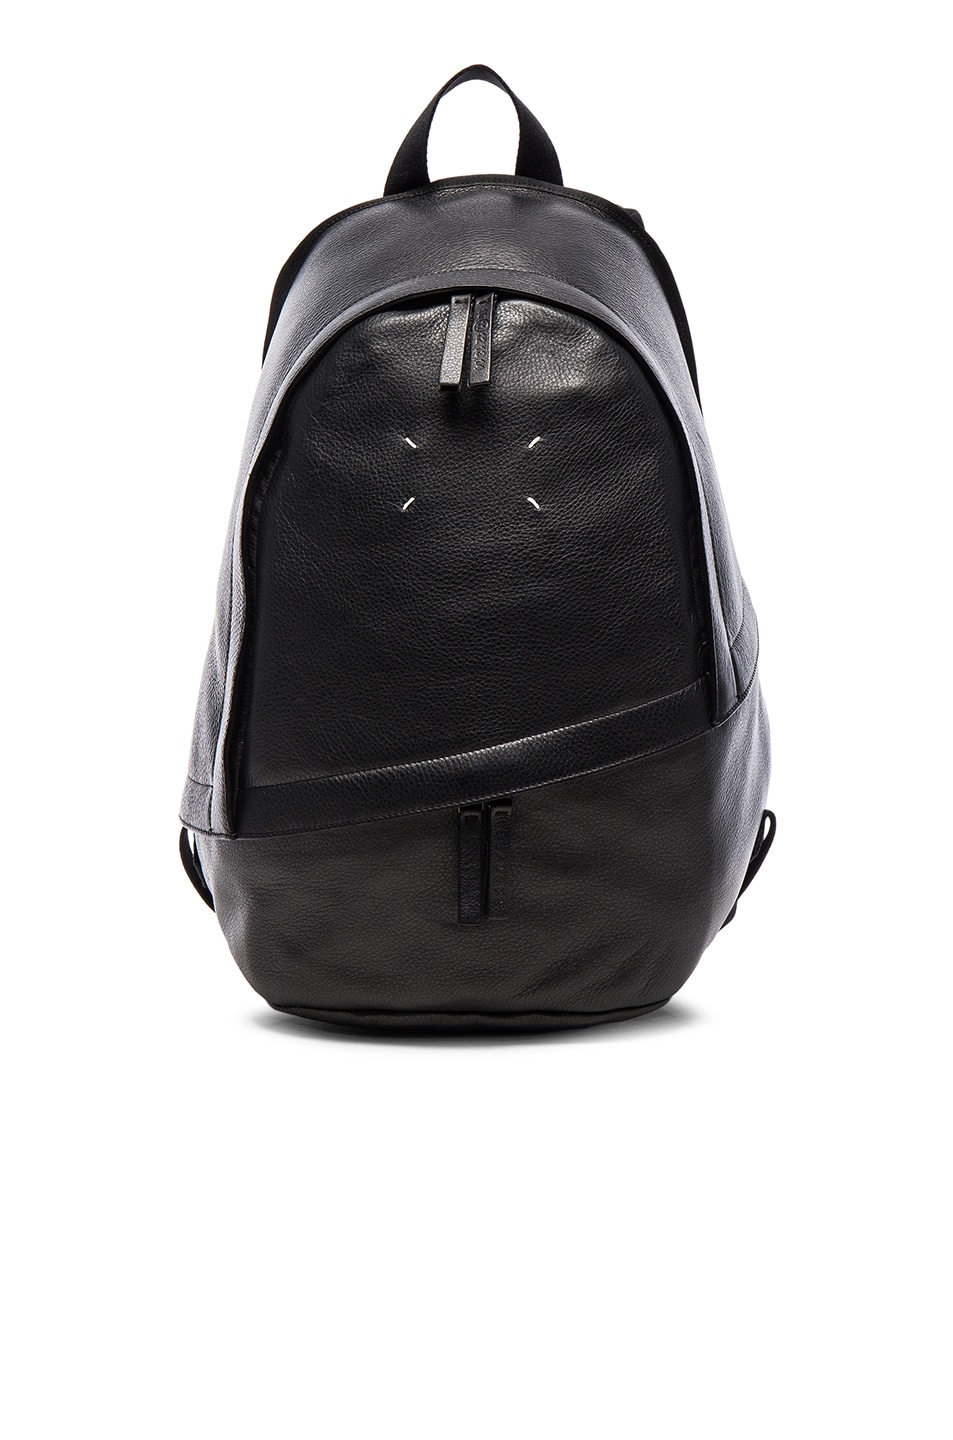 Maison Margiela Backpack in Black | FWRD